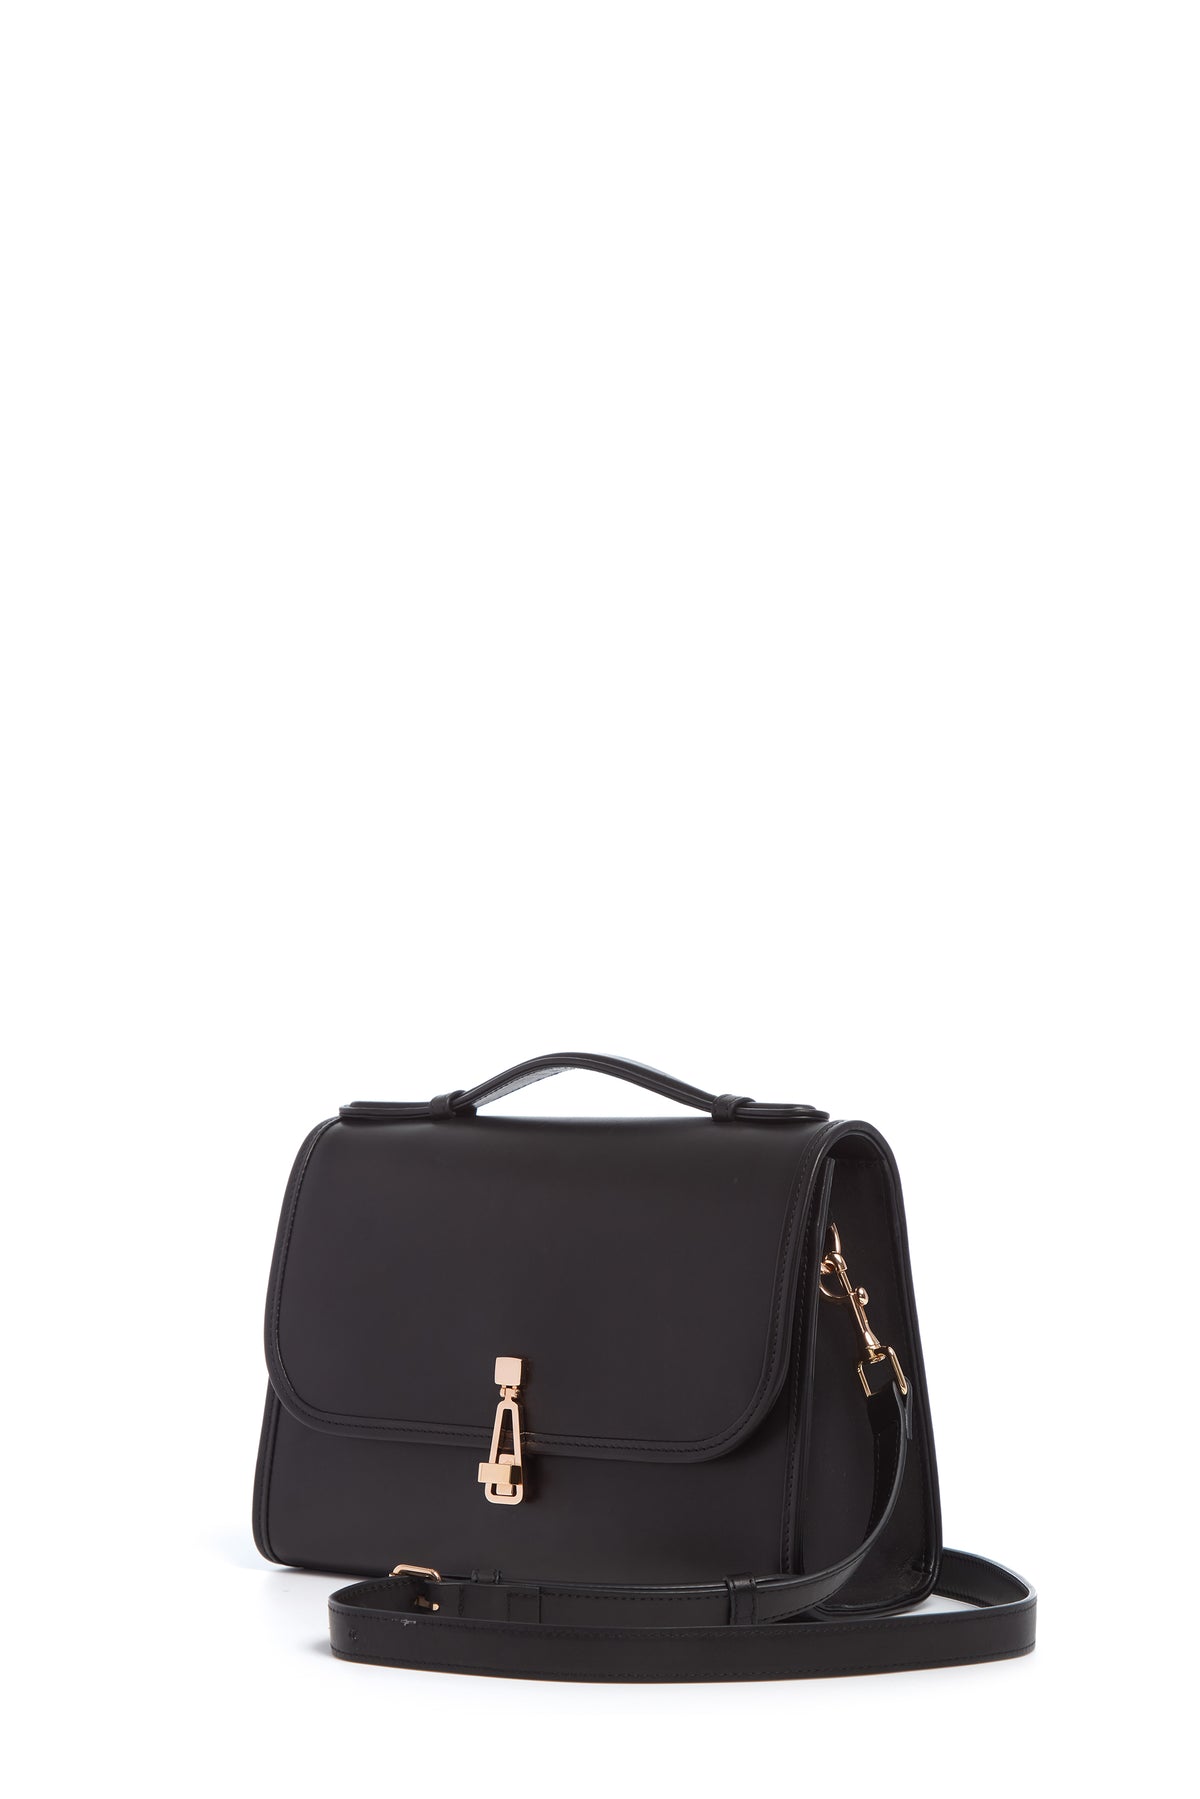 Medium Leonora Bag in Black Nappa Leather